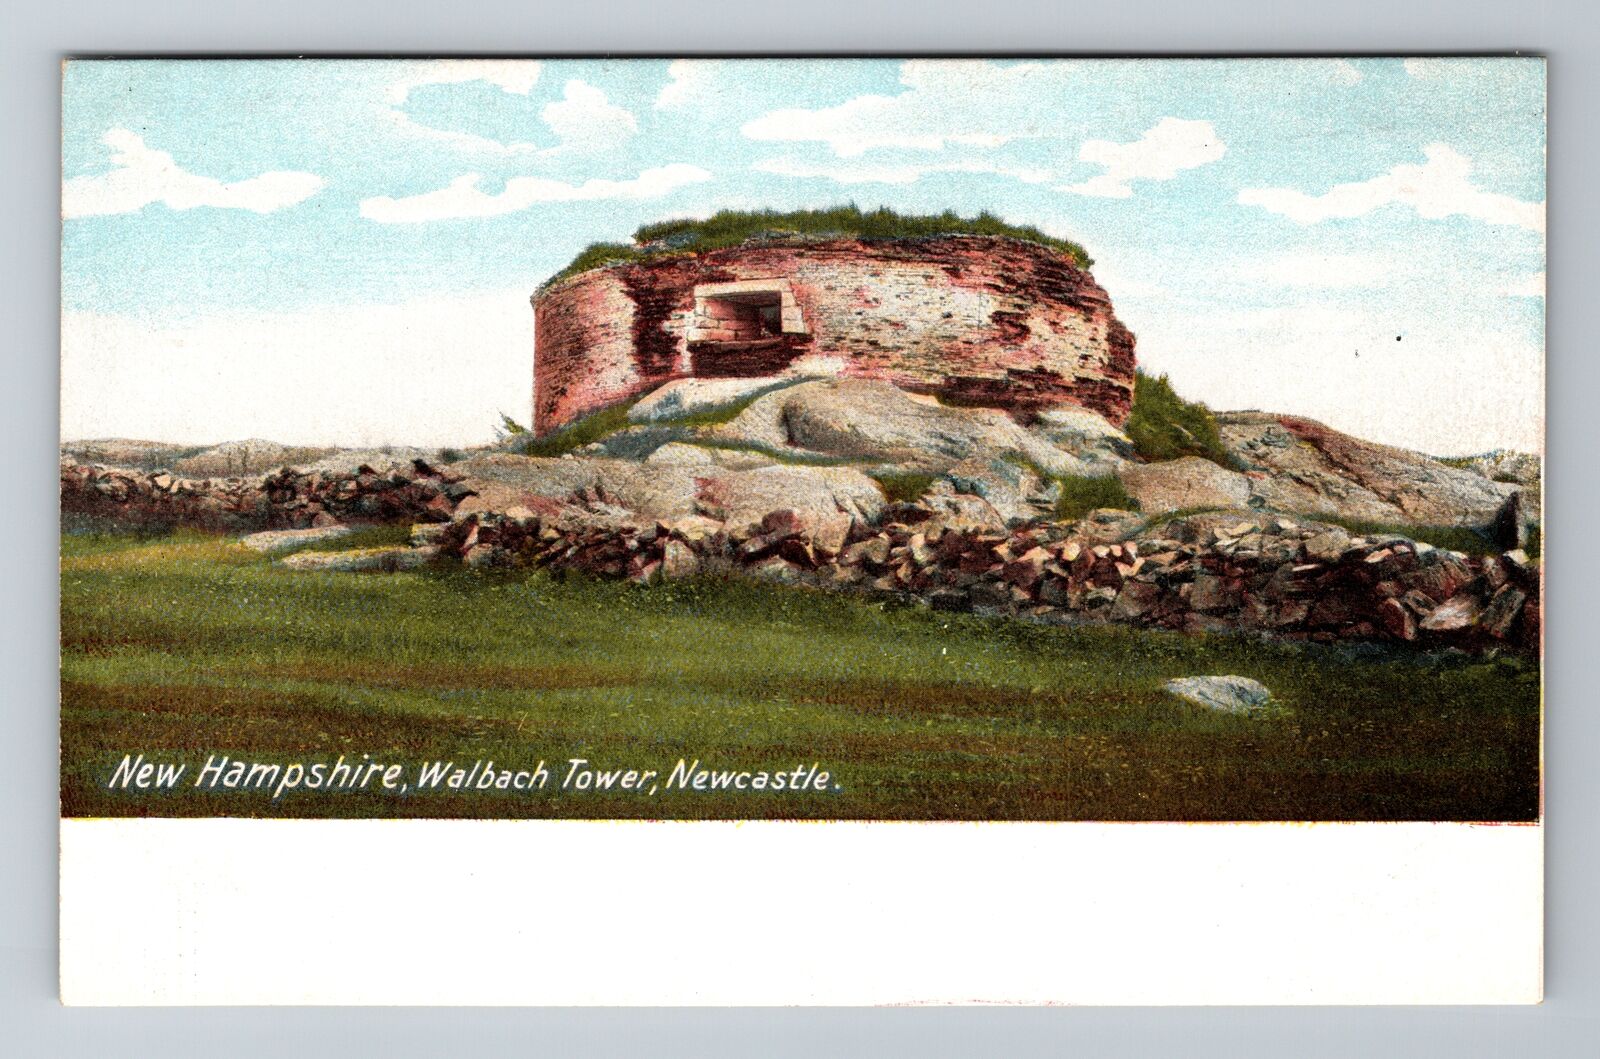 Newcastle NH-New Hampshire, Walback Tower, Antique, Vintage Souvenir Postcard